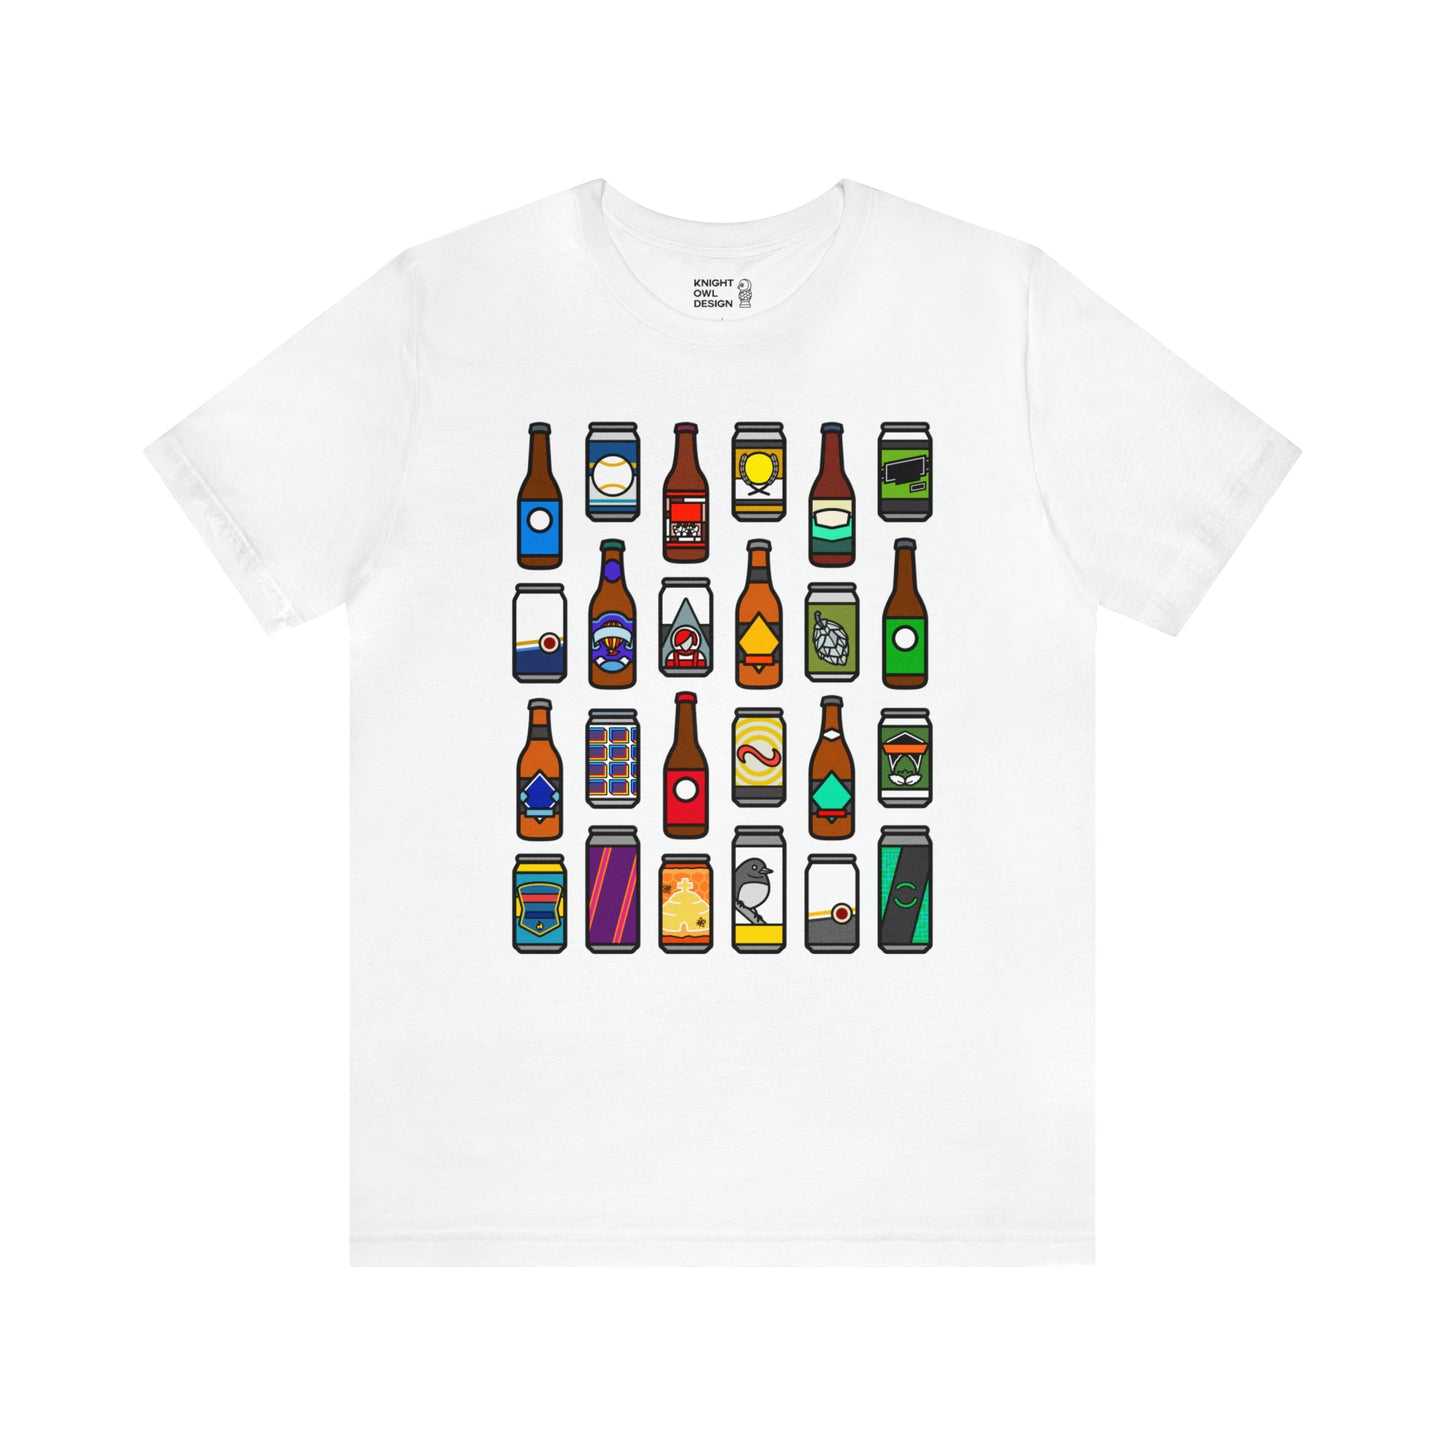 Beers of Kansas City – Unisex Tee Shirt